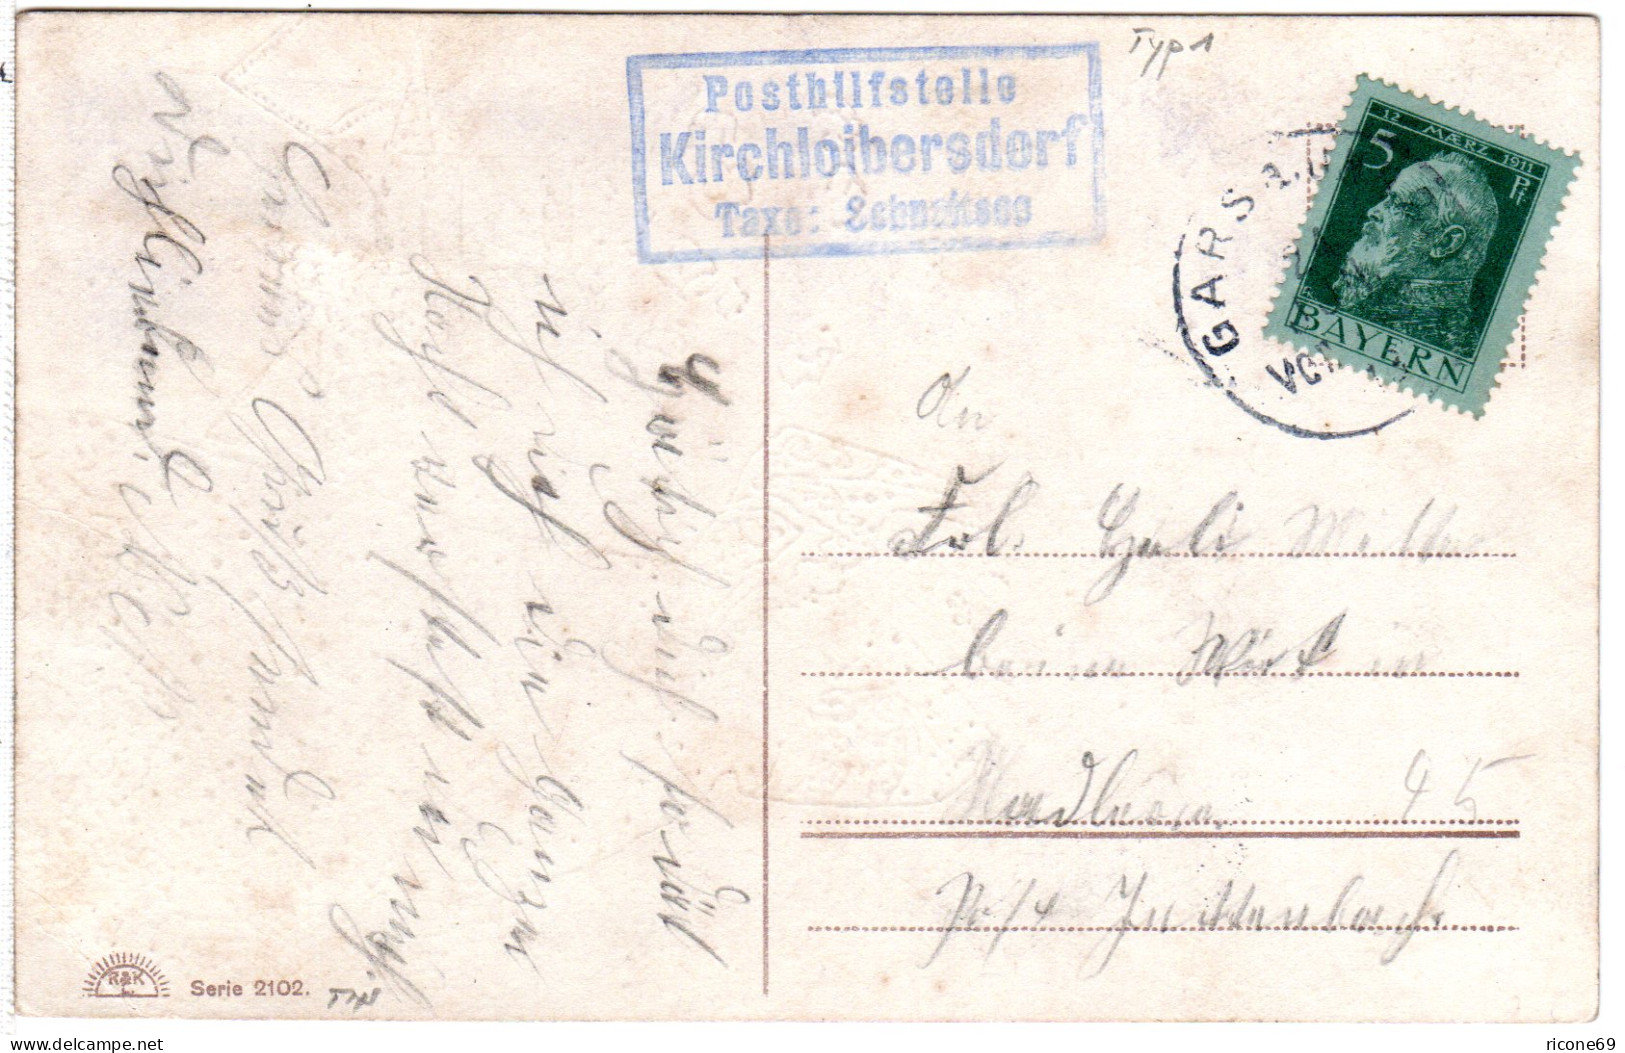 Bayern 1913, Posthilfstelle KIRCHLOIBERSDORF Taxe Schnaitsee Auf Karte M. 5 Pf. - Briefe U. Dokumente